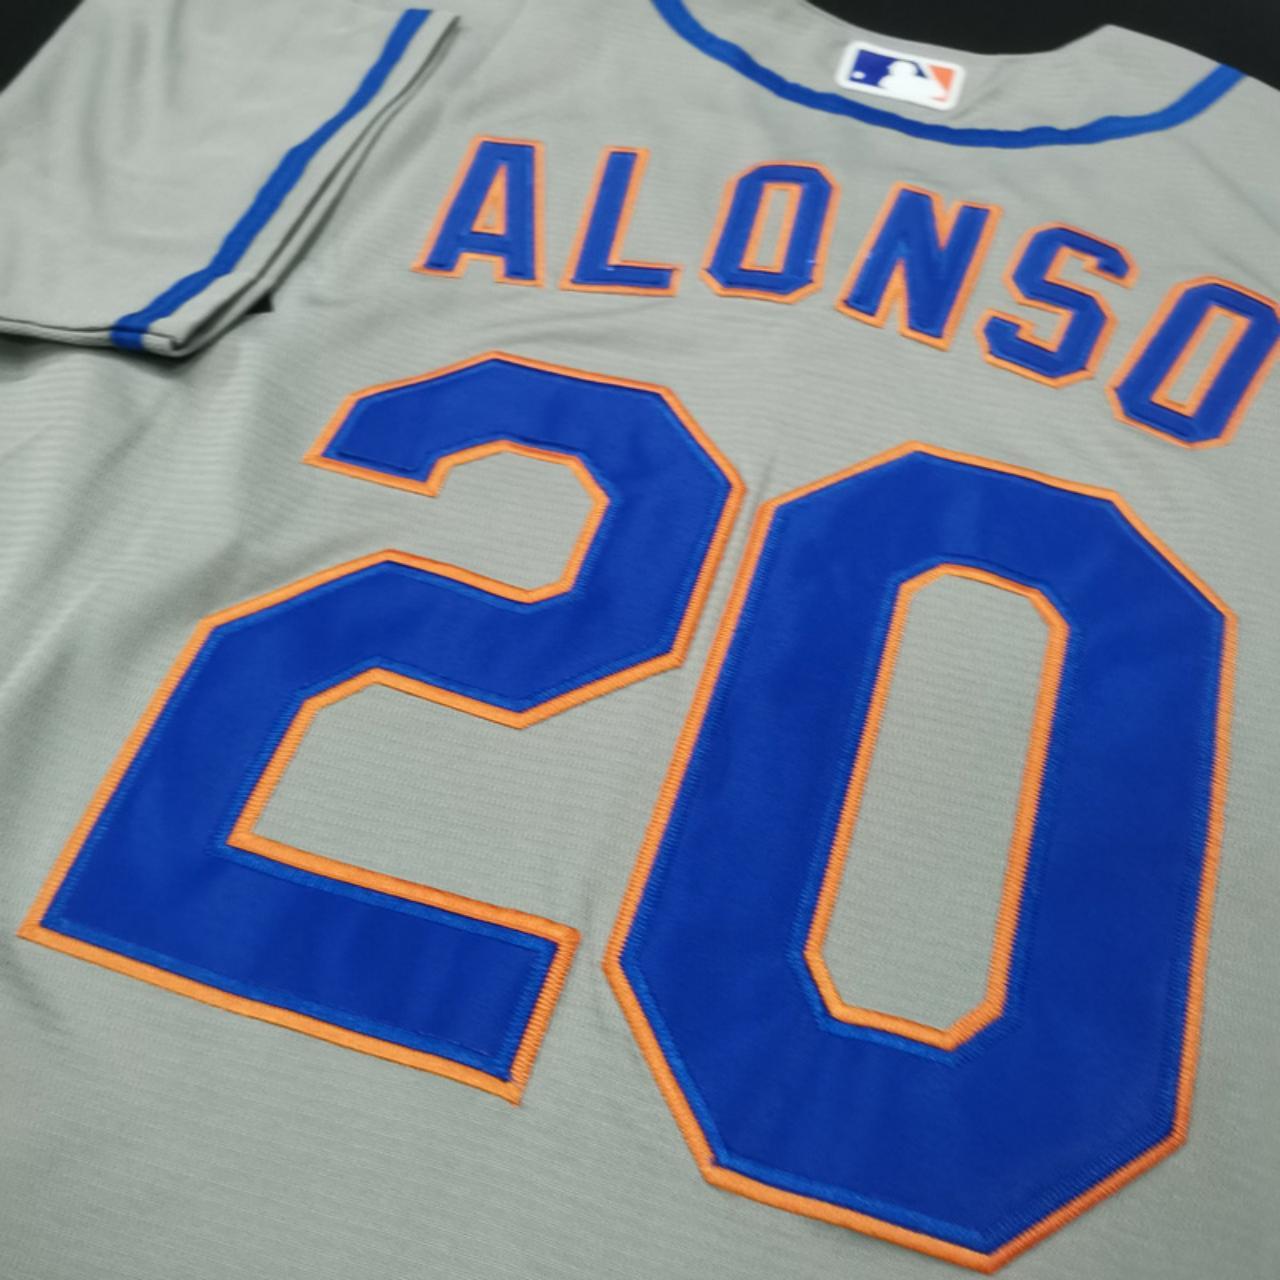 Nike Men's New York Mets Pete Alonso #20 Blue T-Shirt